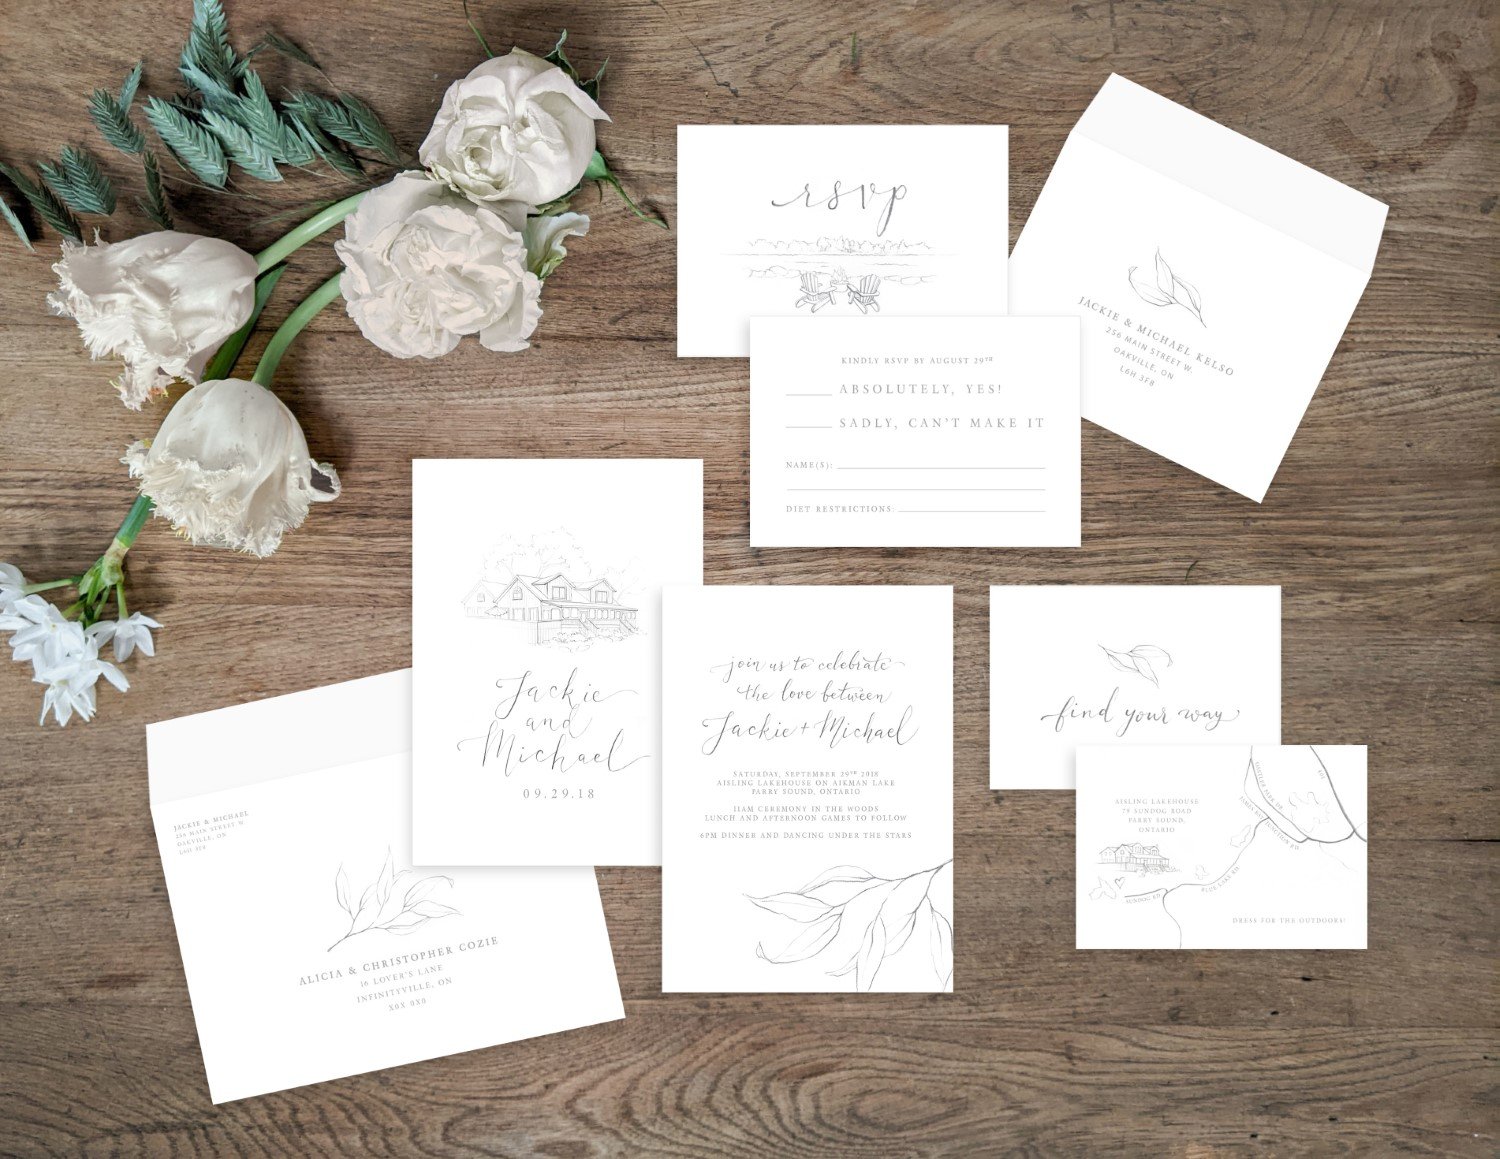 Venue and Leaves Sketch Wedding Invitation by Alicias Infinity-3 (Custom).jpg